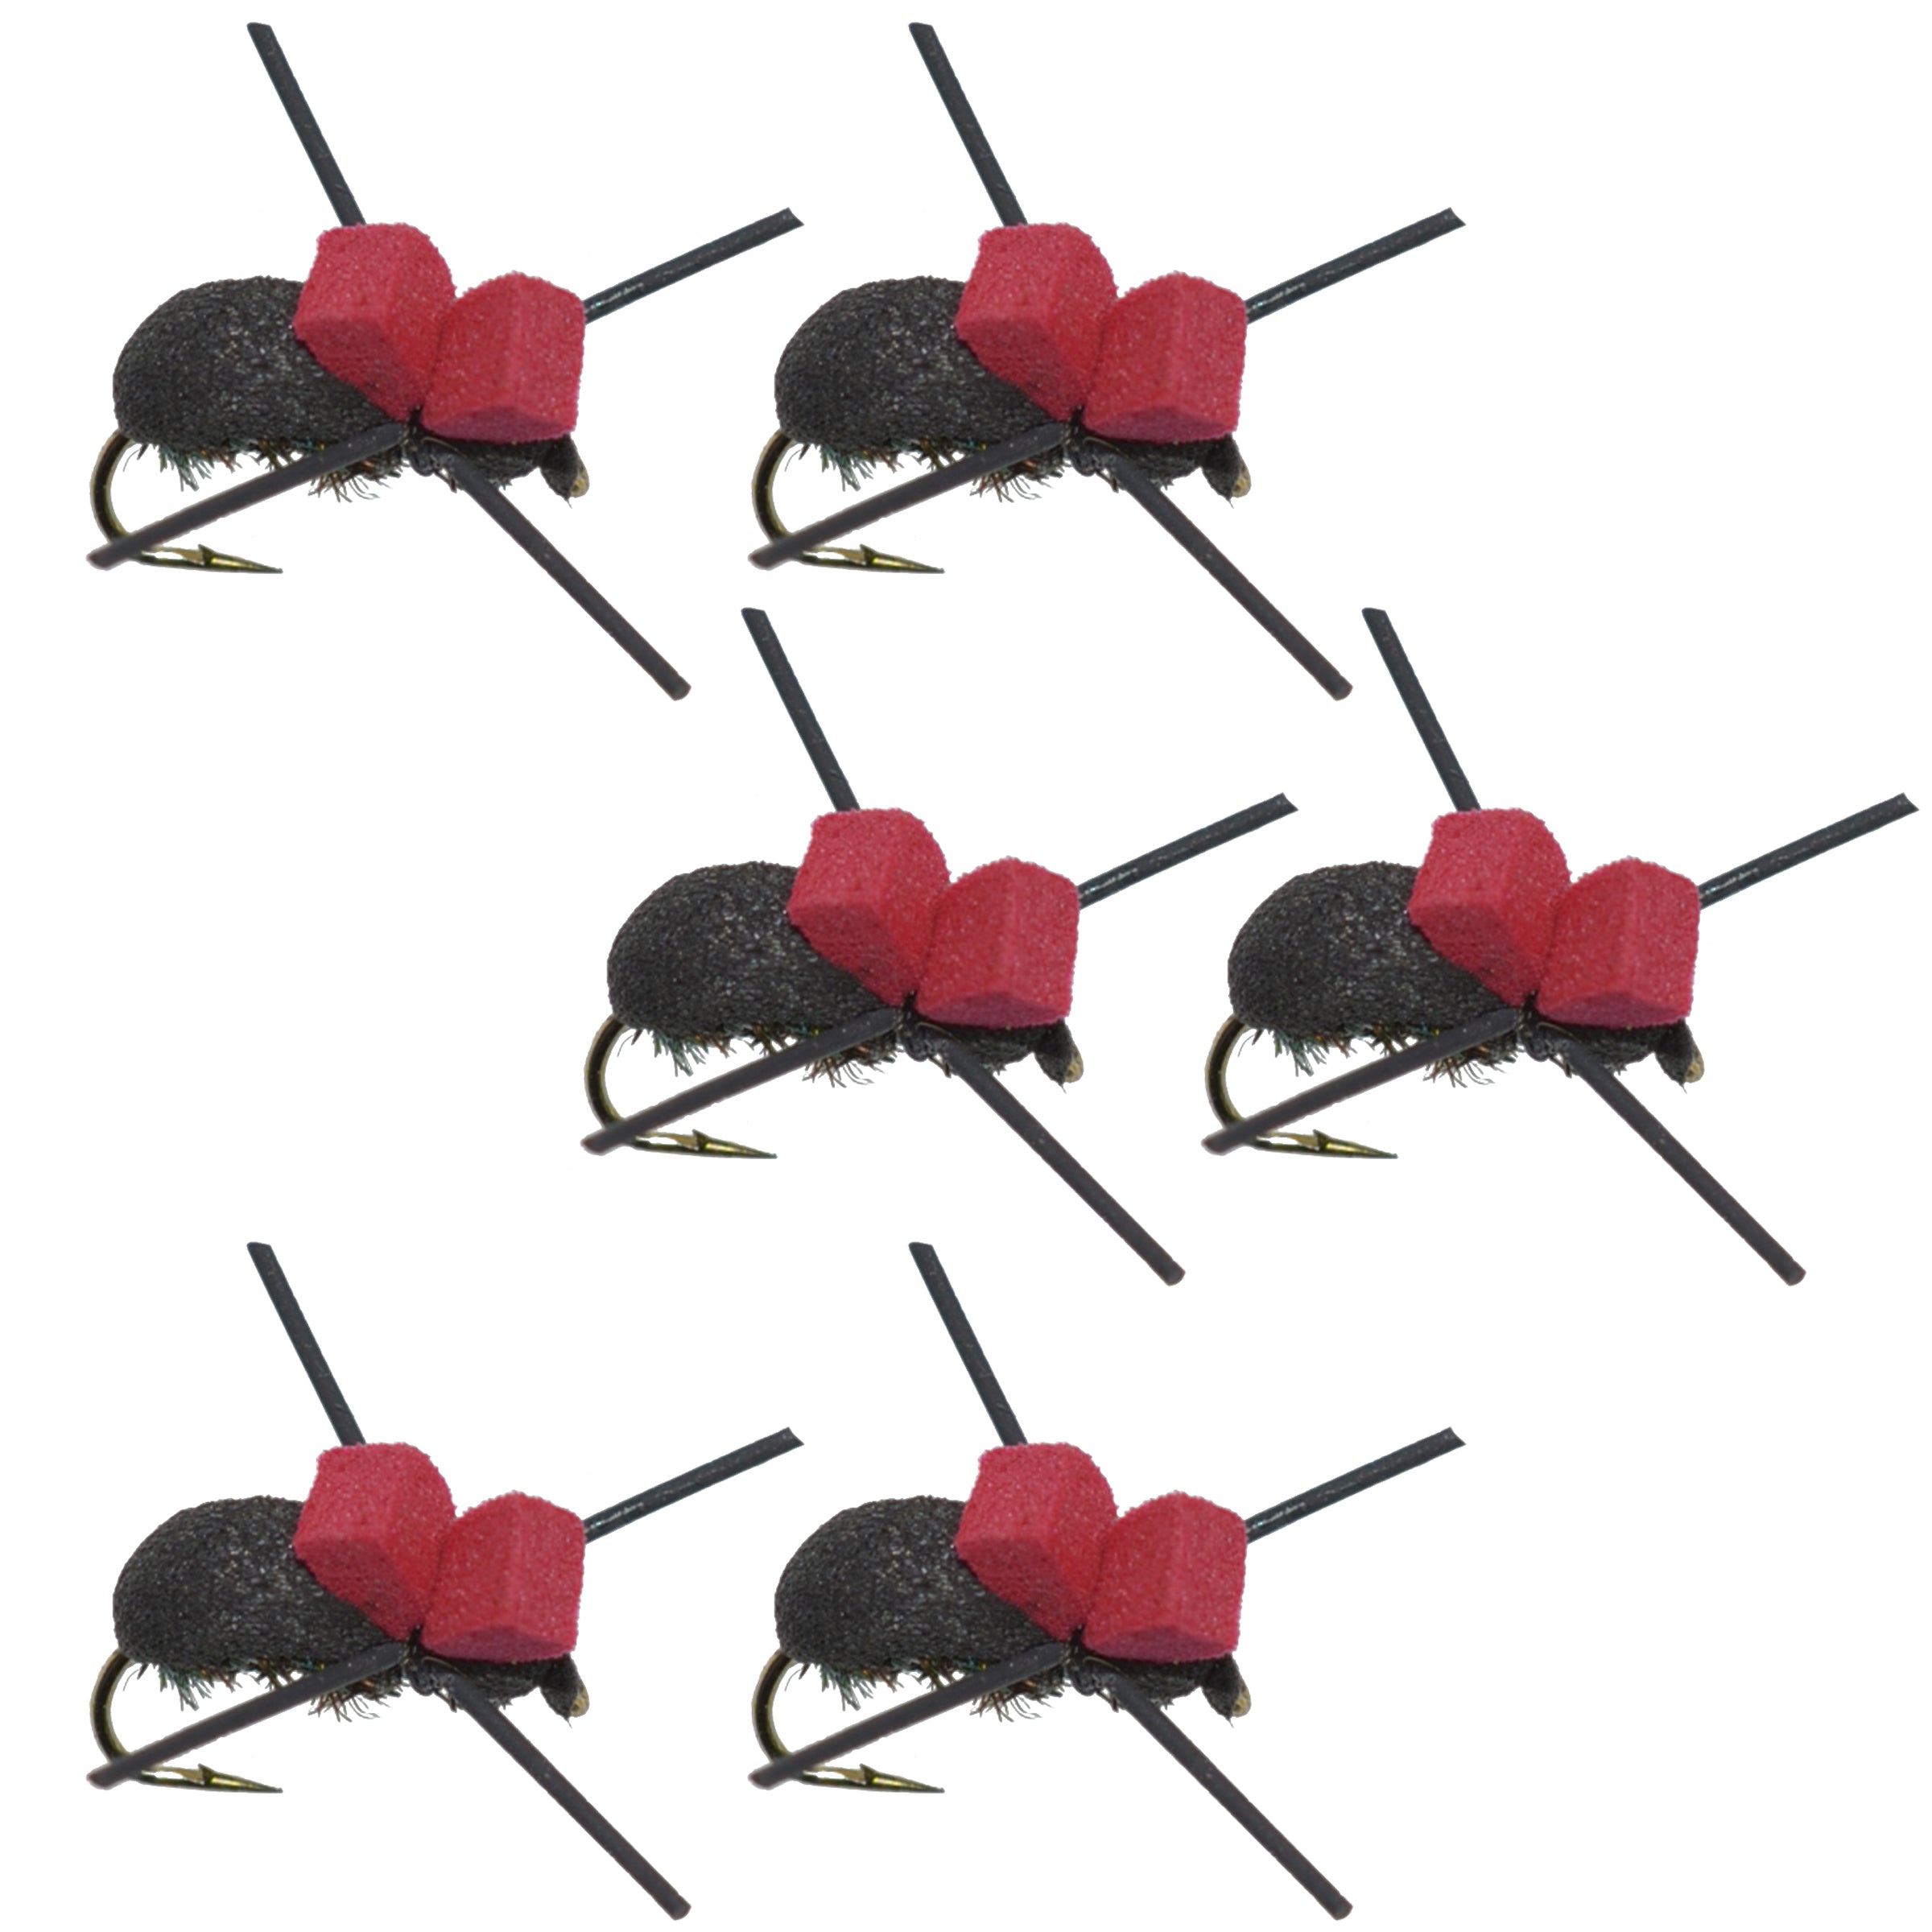 Red Top Black Foam Beetle Terrestrial Trout Dry Fly Fishing Flies - 6 Flies Size 14